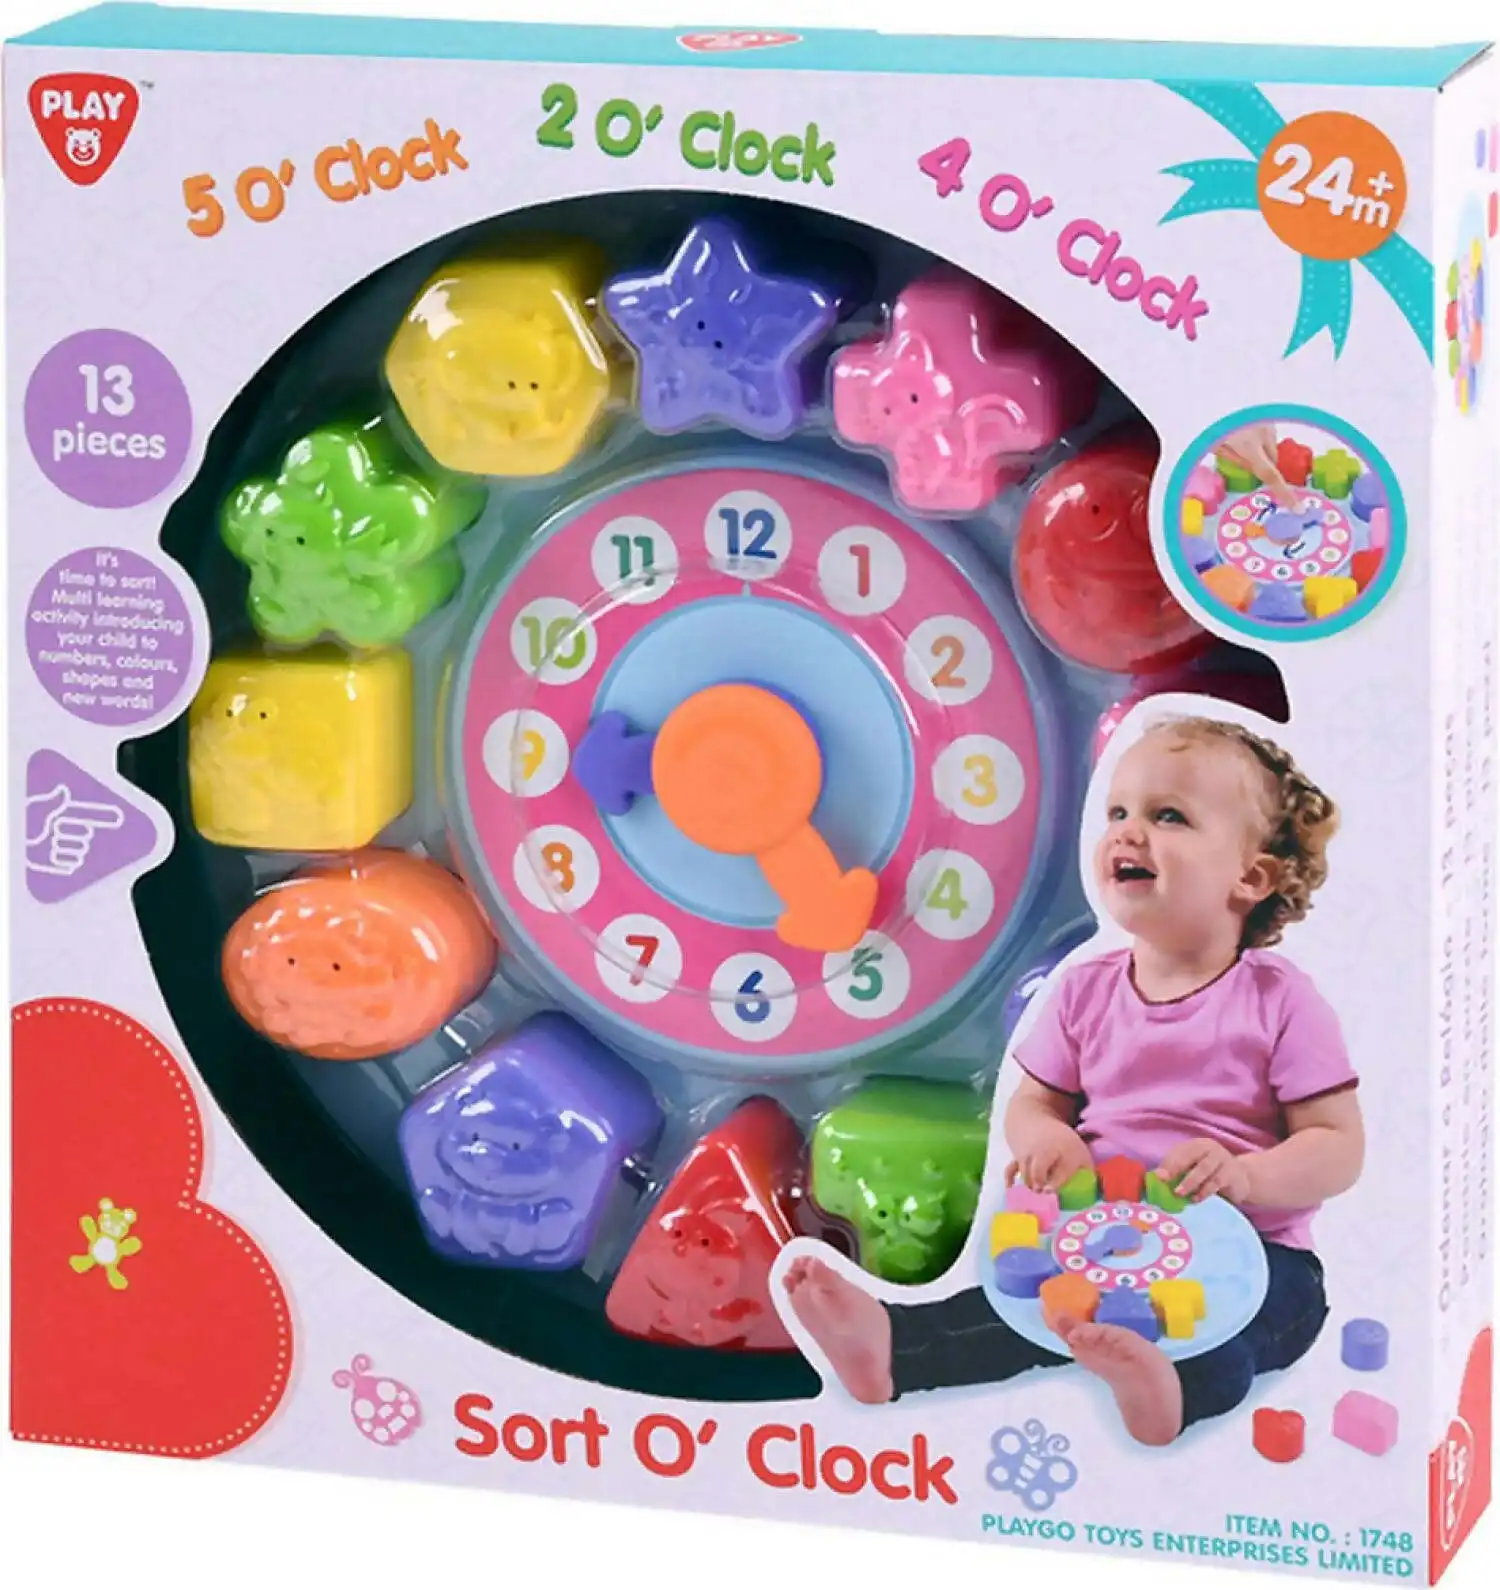 Playgo Toys Ent. Ltd - Sort O Clock